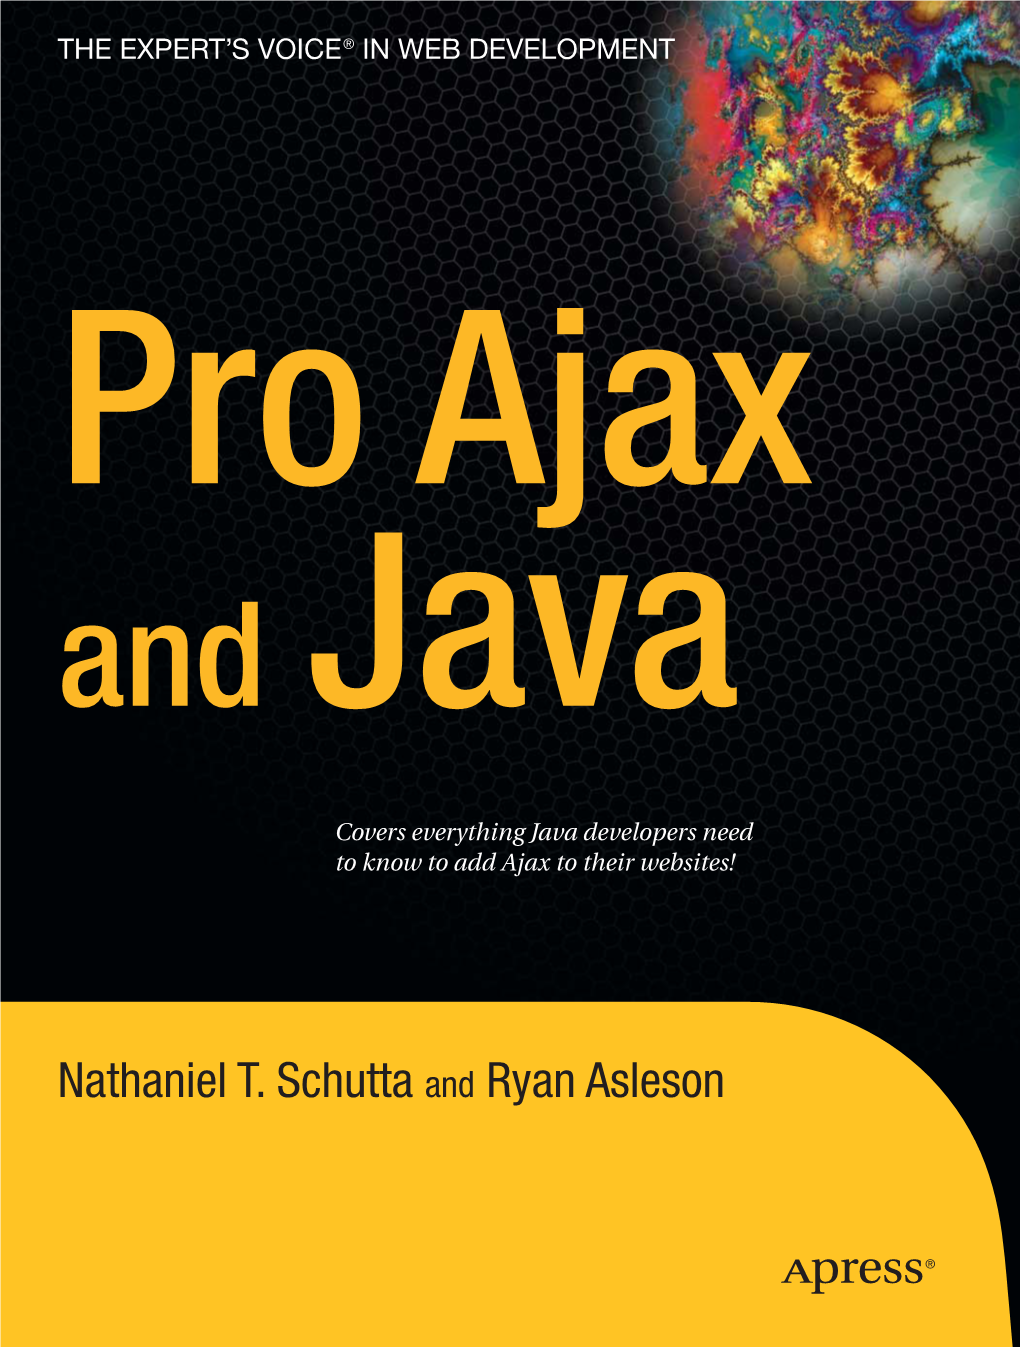 Pro Ajax Java